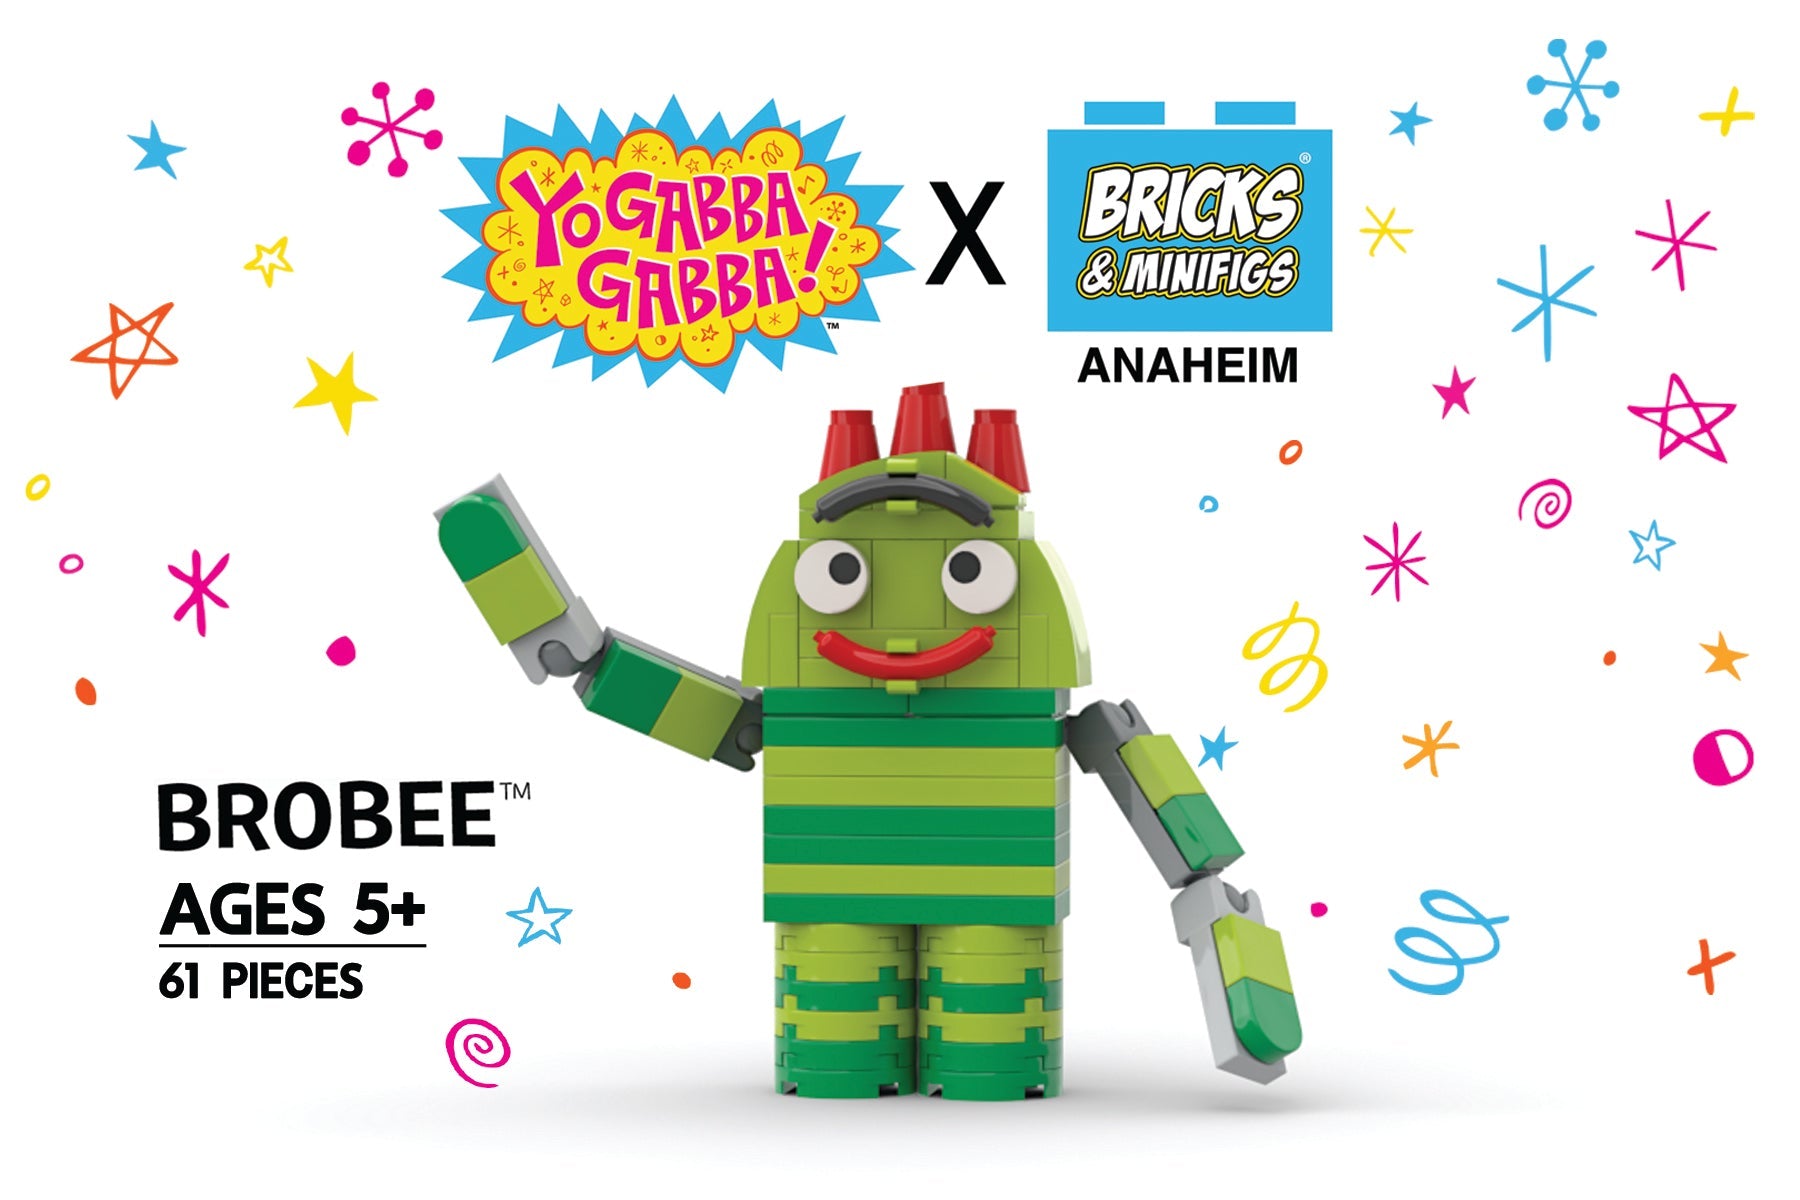 Brobee Brick Build! A Yo Gabba Gabba x Bricks & Minifigs Anaheim Collaboration